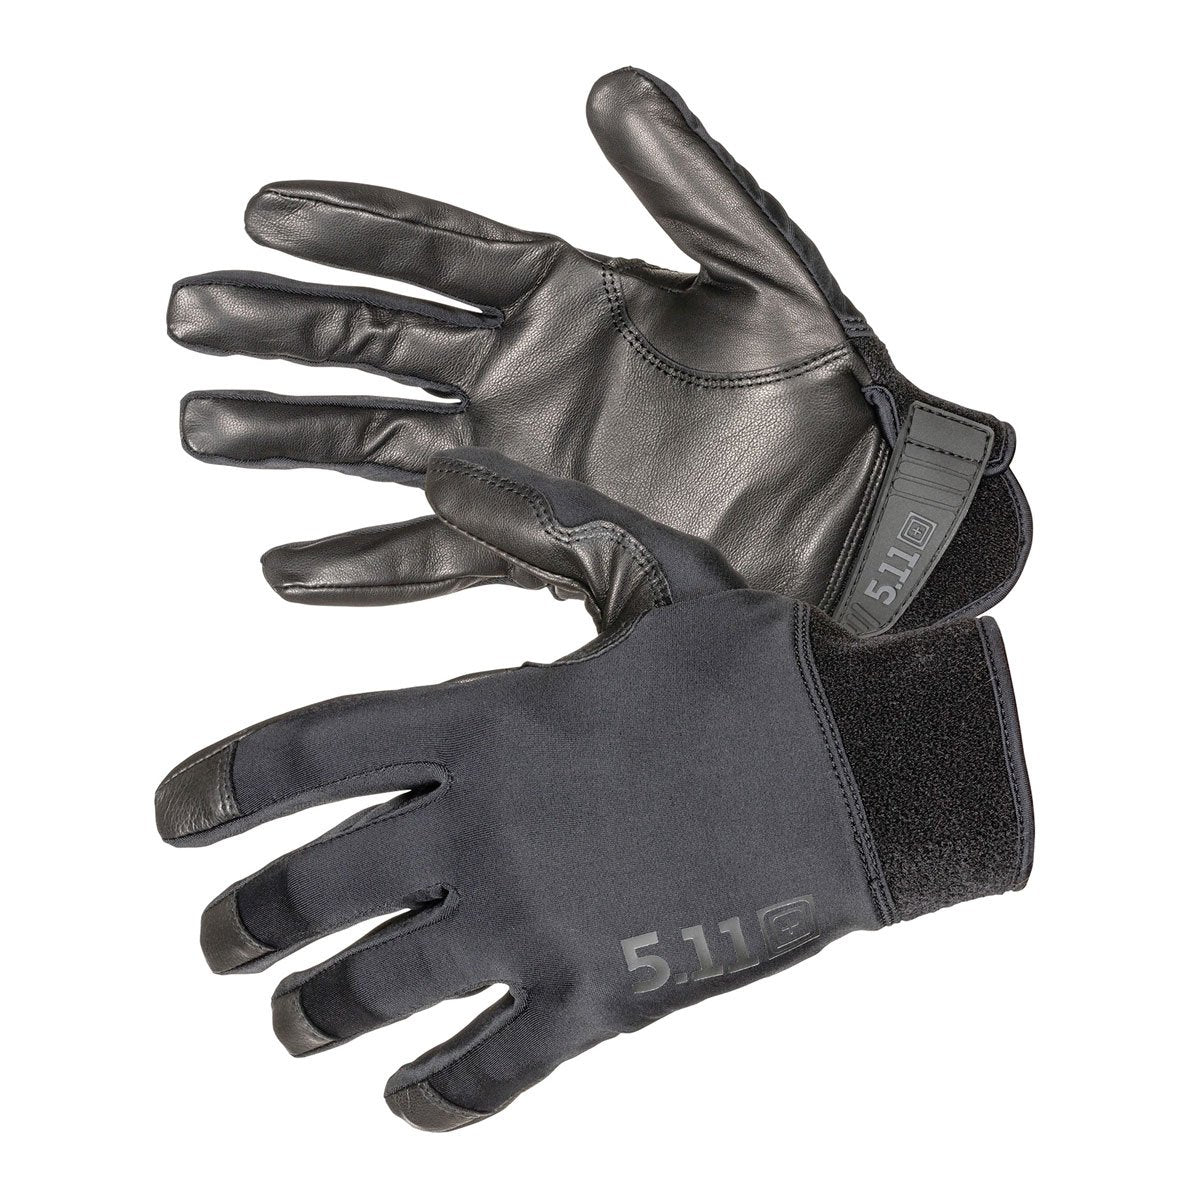 5.11 Tactical Taclite 3 Glove | Tactical Gear Australia Tactical Gear